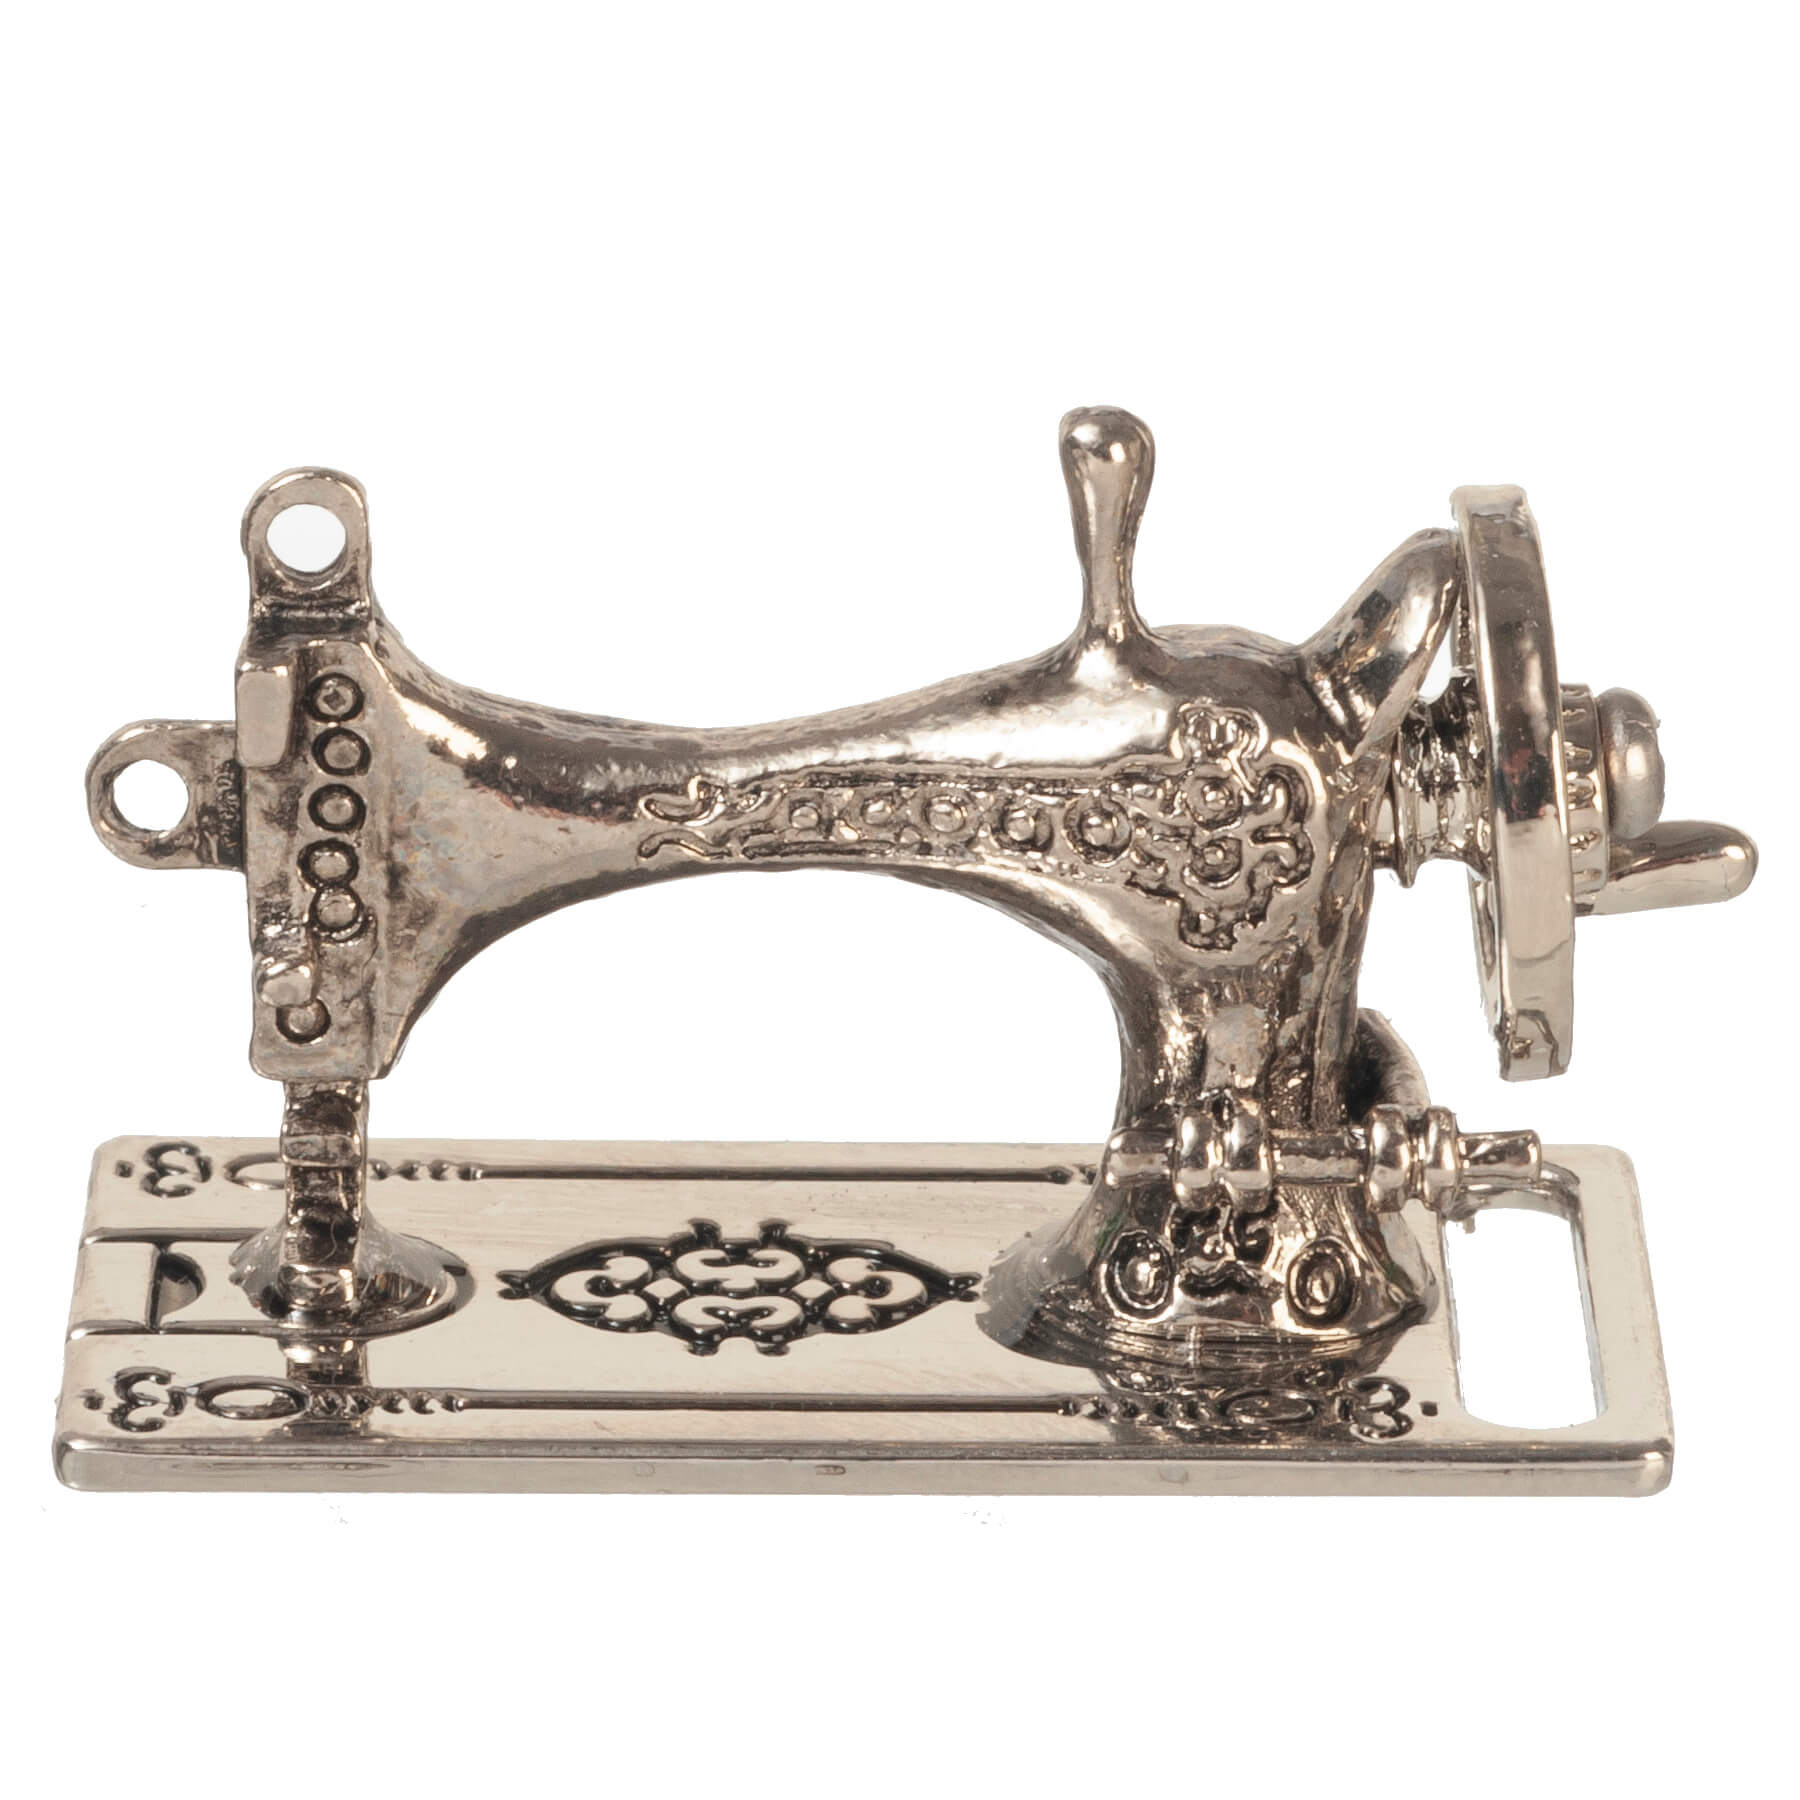 Sewing Machine - Silver